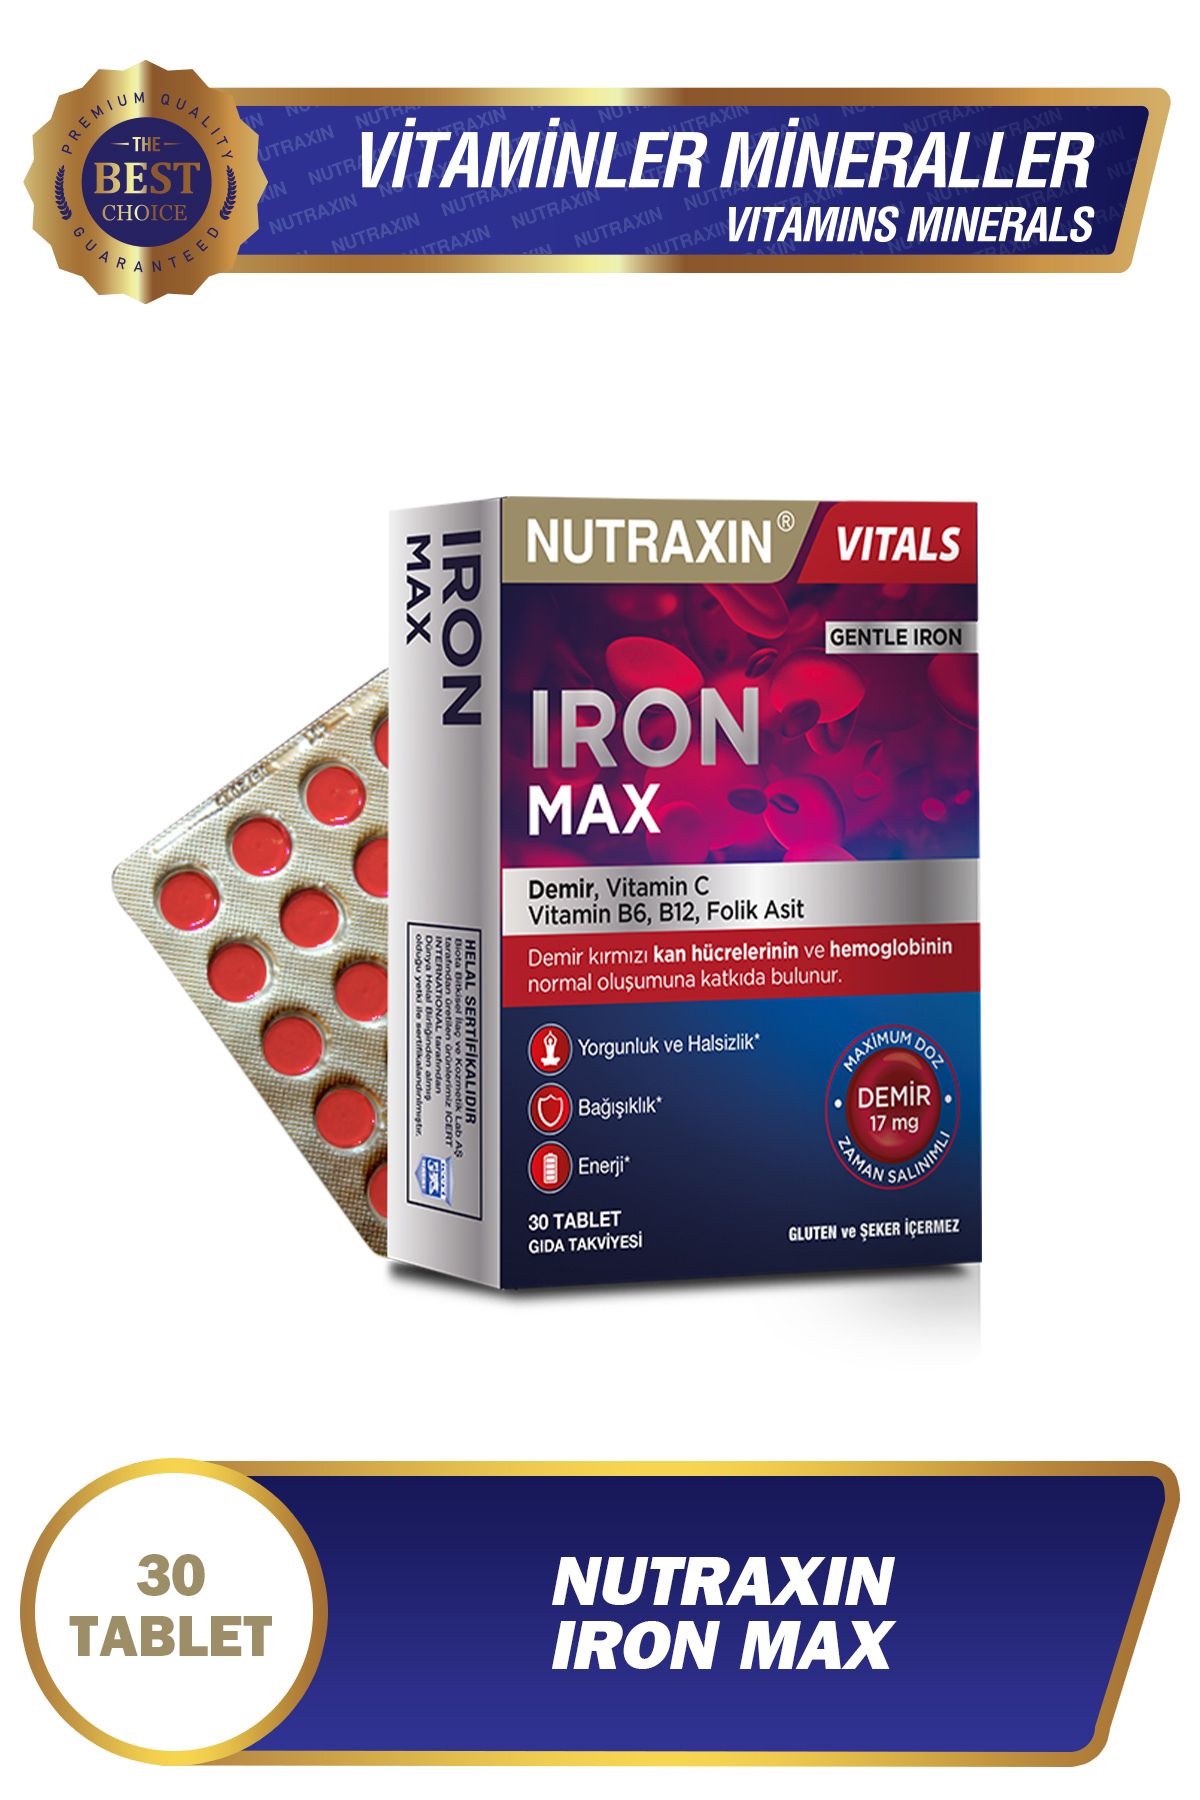 Nutraxin Iron Max 17 Mg 30 Tablet - Demir, C Vitamini, B6 Vitamini, Folik Asit, B12